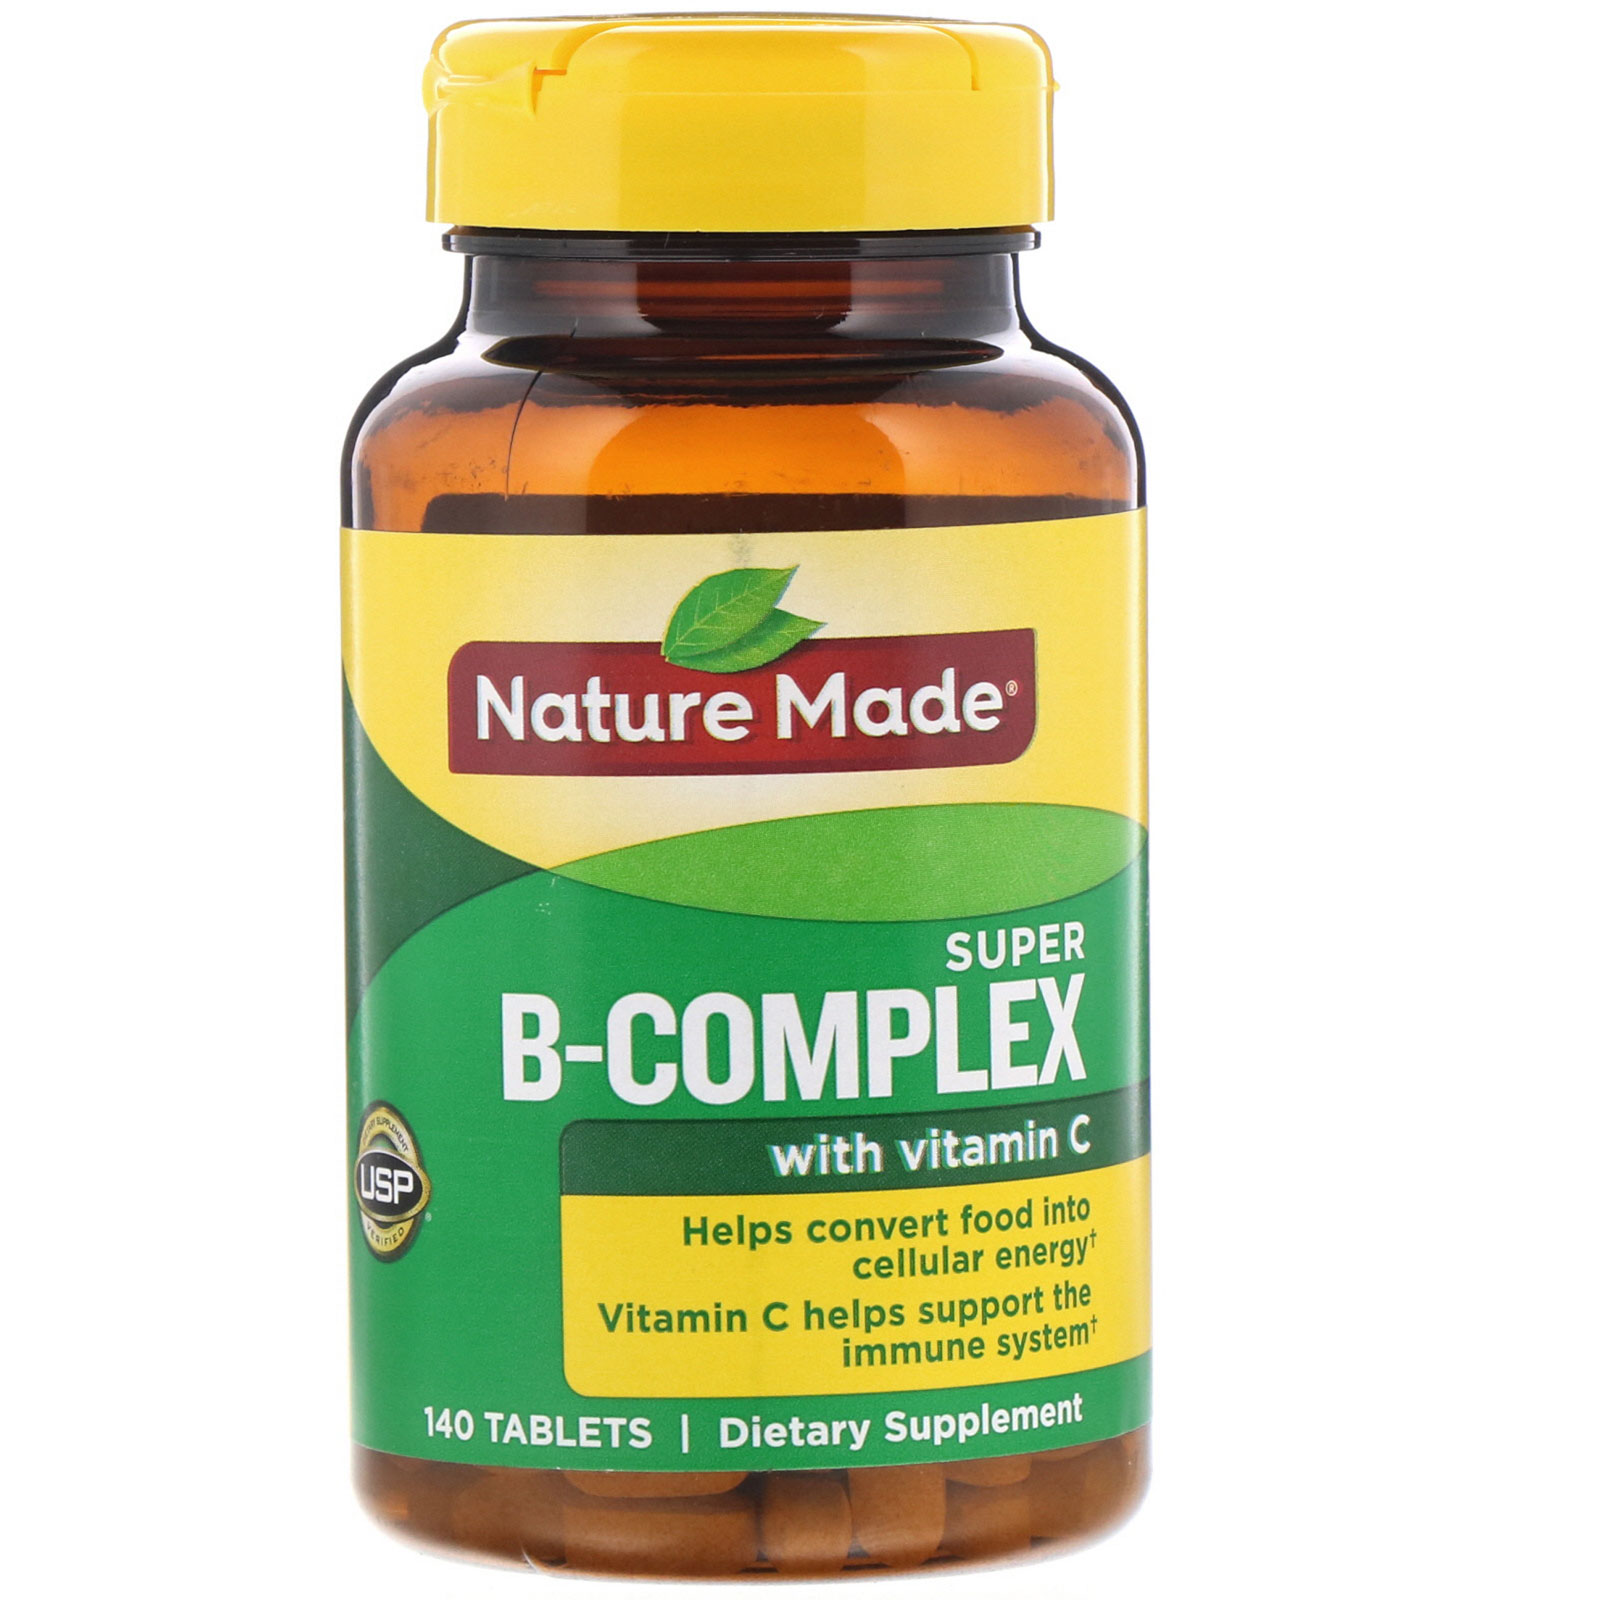 Made, Super B-Complex with Vitamin C, 140